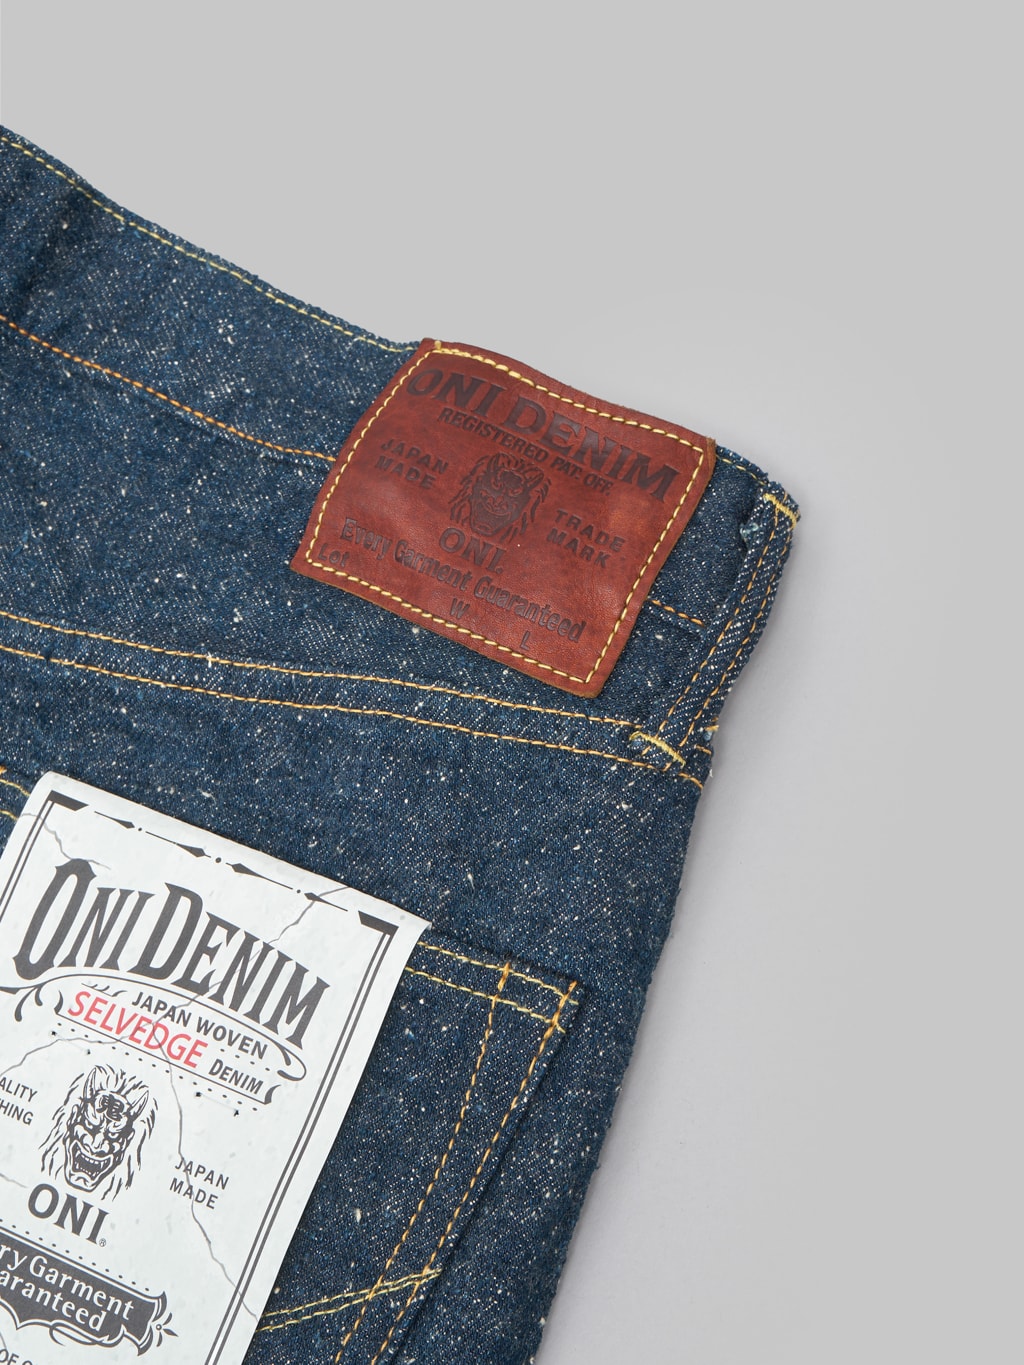 ONI Denim 266-CCD "Crushed Concrete Denim" 14.7oz Relax Straight Jeans